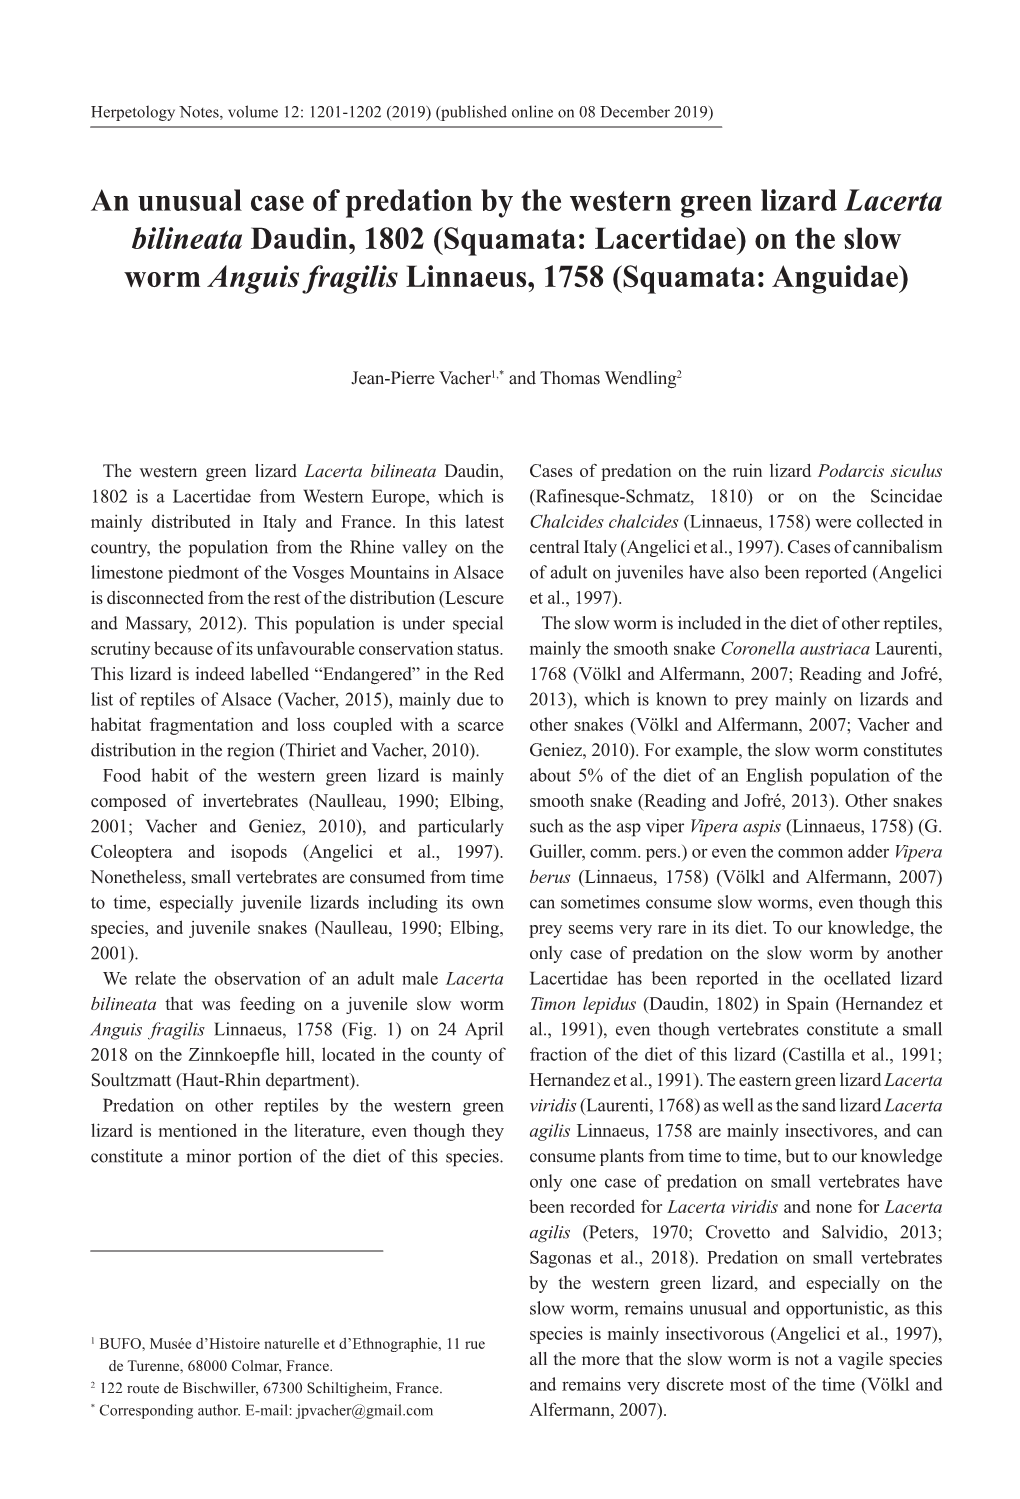 On the Slow Worm Anguis Fragilis Linnaeus, 1758 (Squamata: Anguidae)